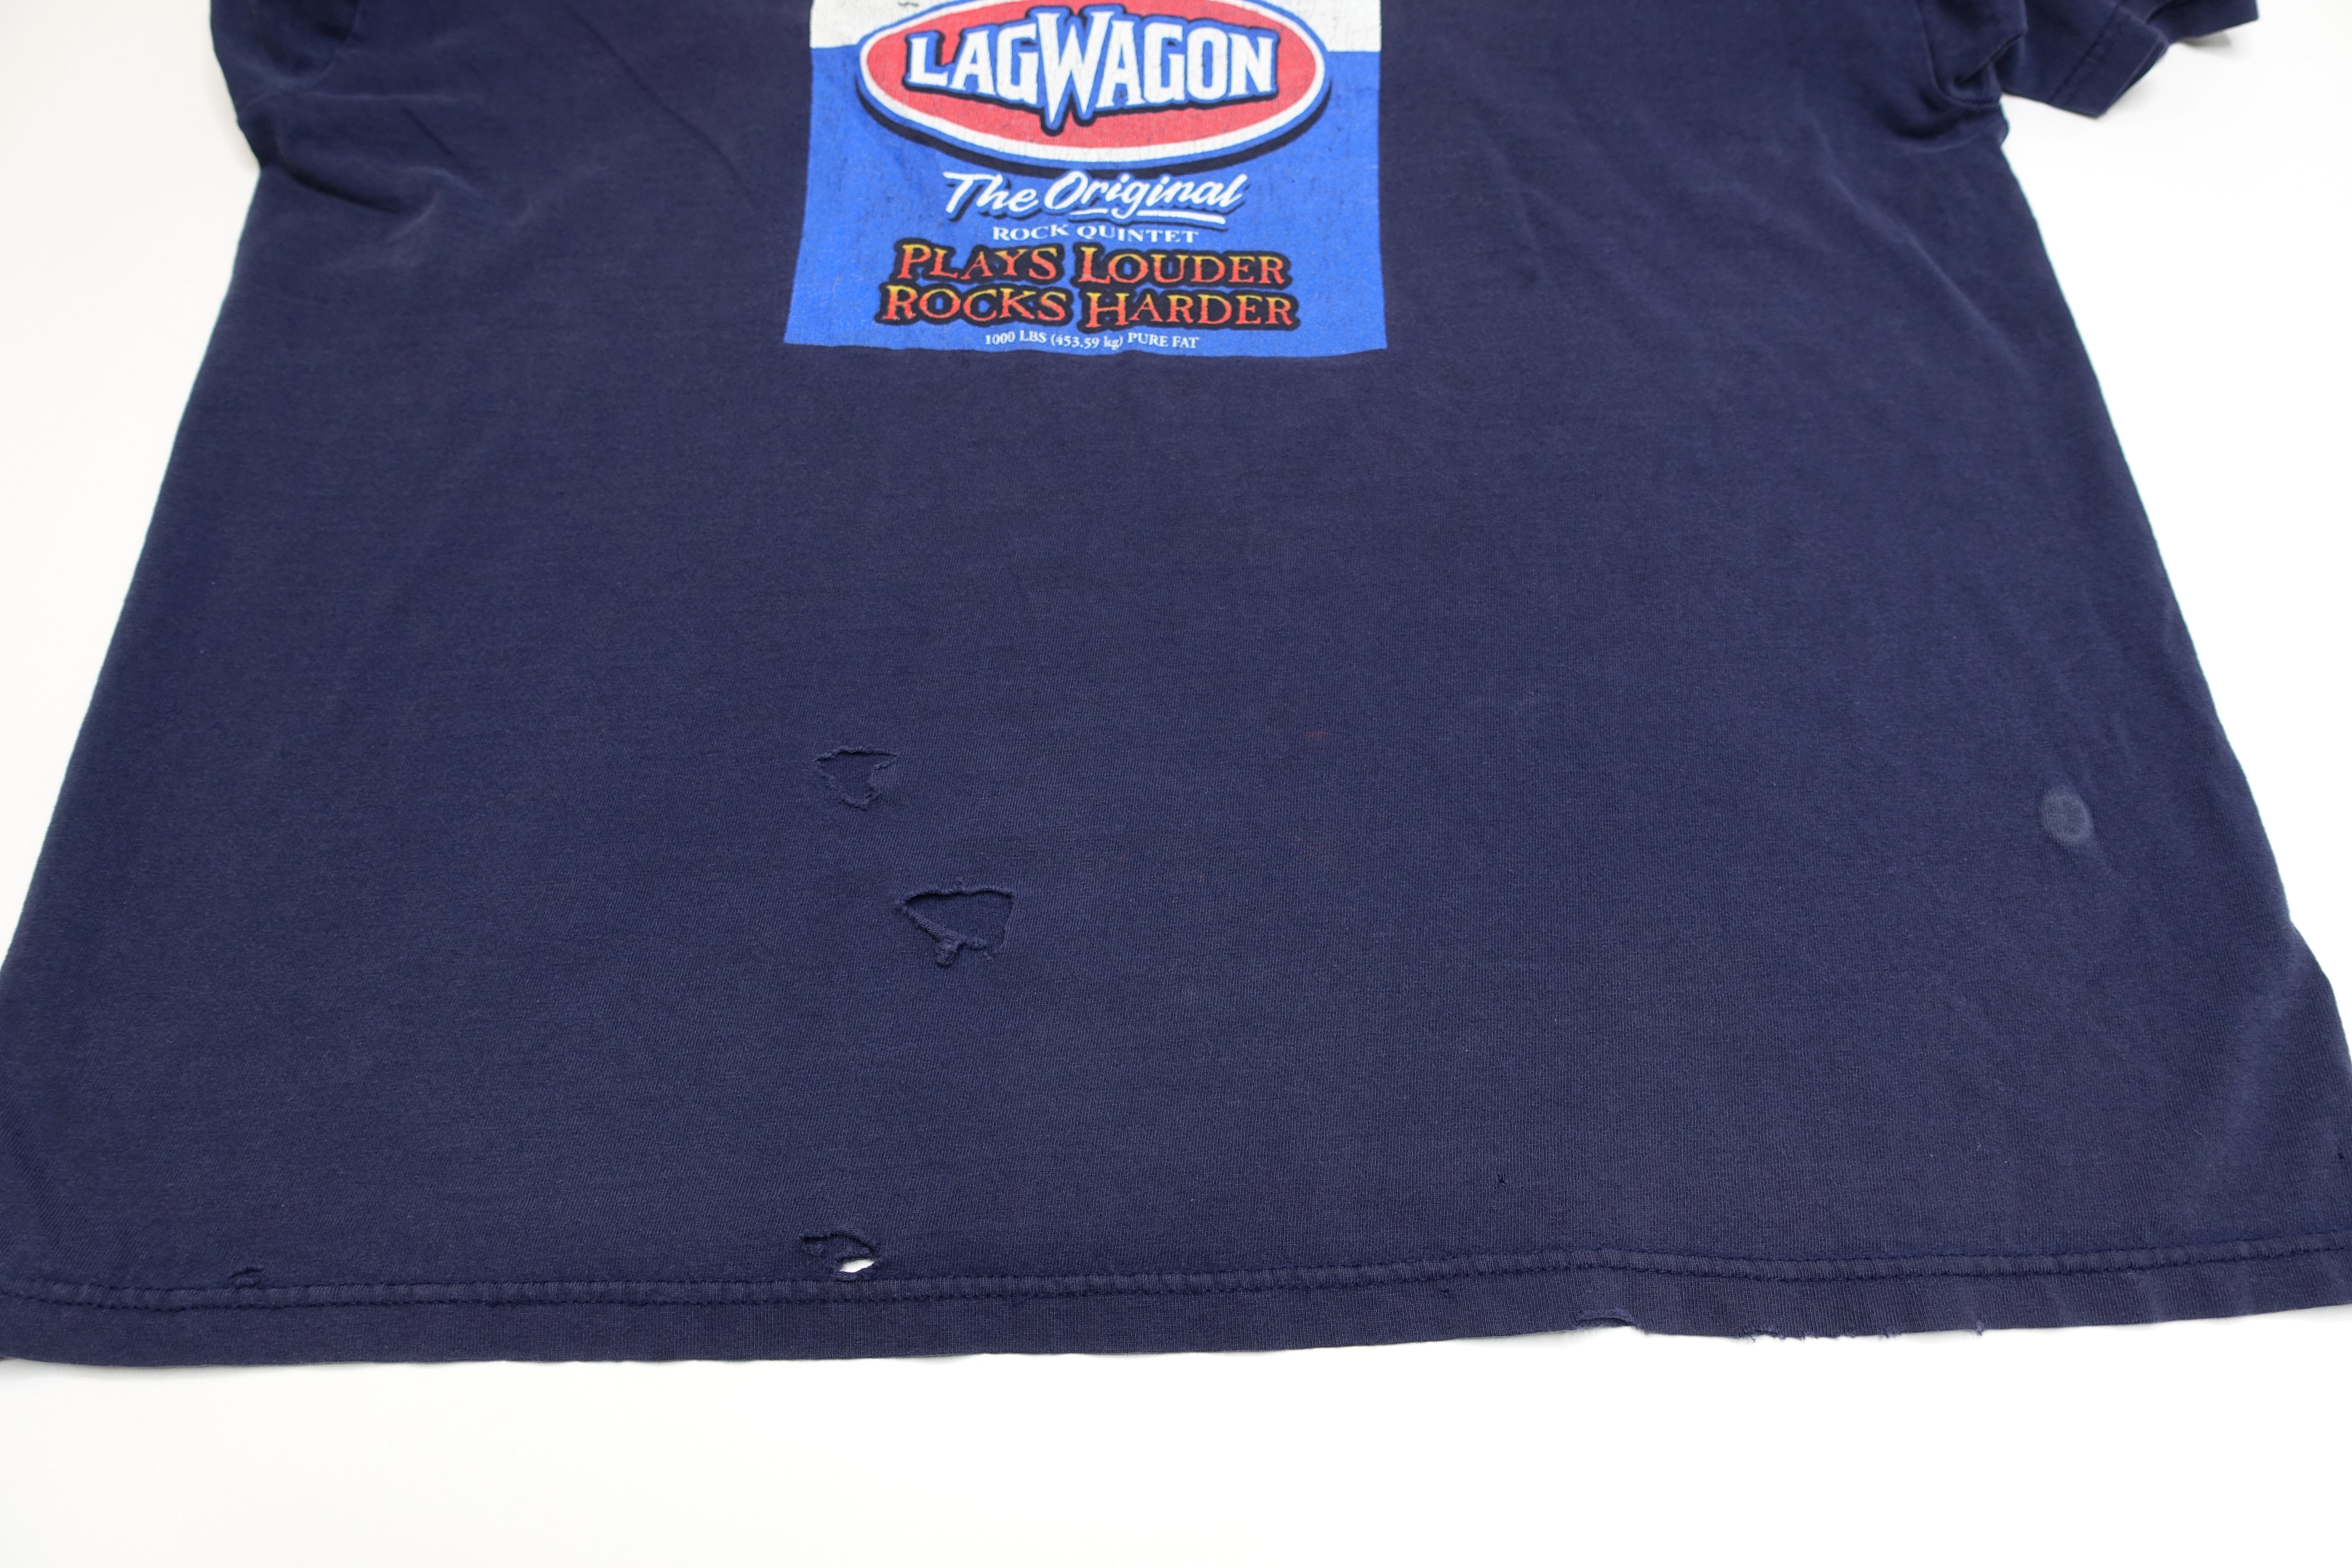 Lagwagon - Plays Louder, Rocks Harder Kingsford BBQ Charcoal 90's Tour Shirt Size XL